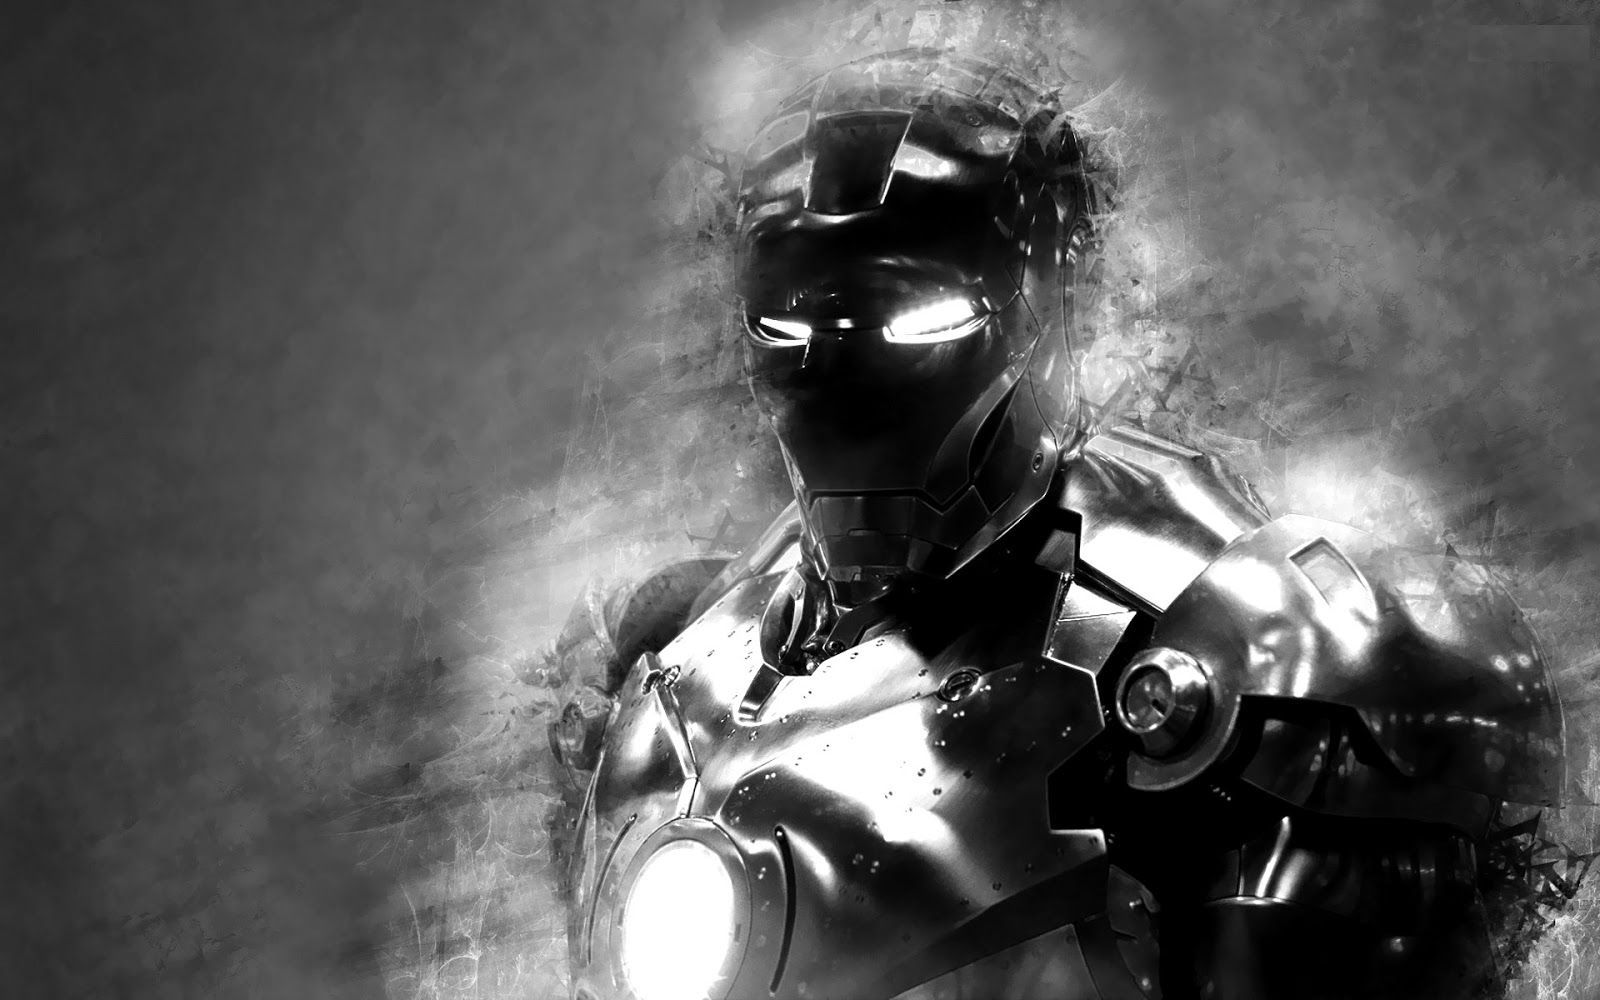 Iron Man 3. Black and White. Iron man wallpaper, Man wallpaper, Iron man movie